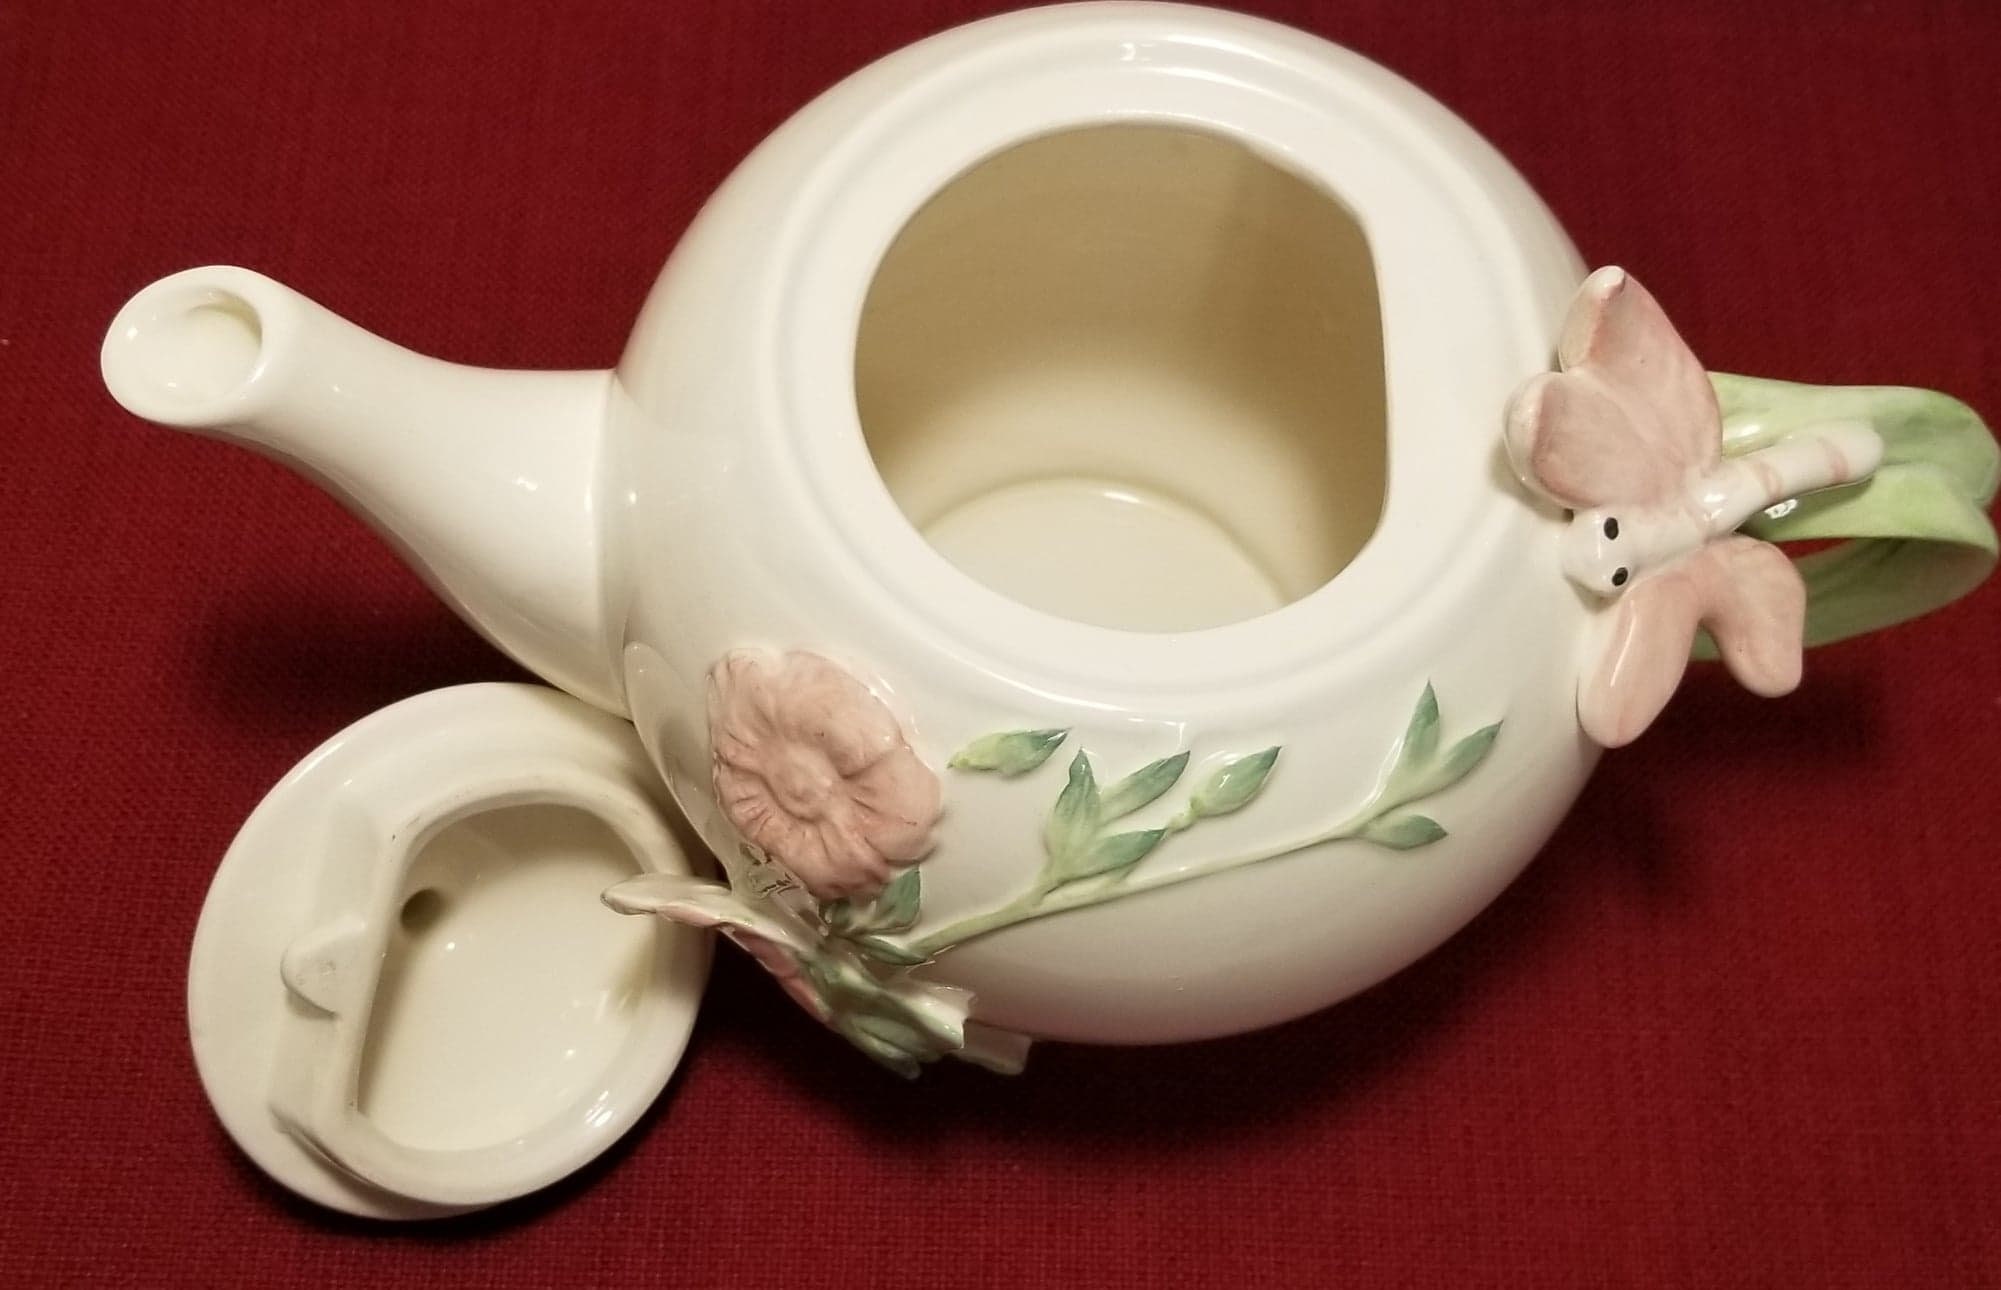 YOLIFE Flowering Shrubs Ceramic Tea Pot, Ivory Vintage Floral Teapot Gift for Women, 29 oz/ 3 Cup